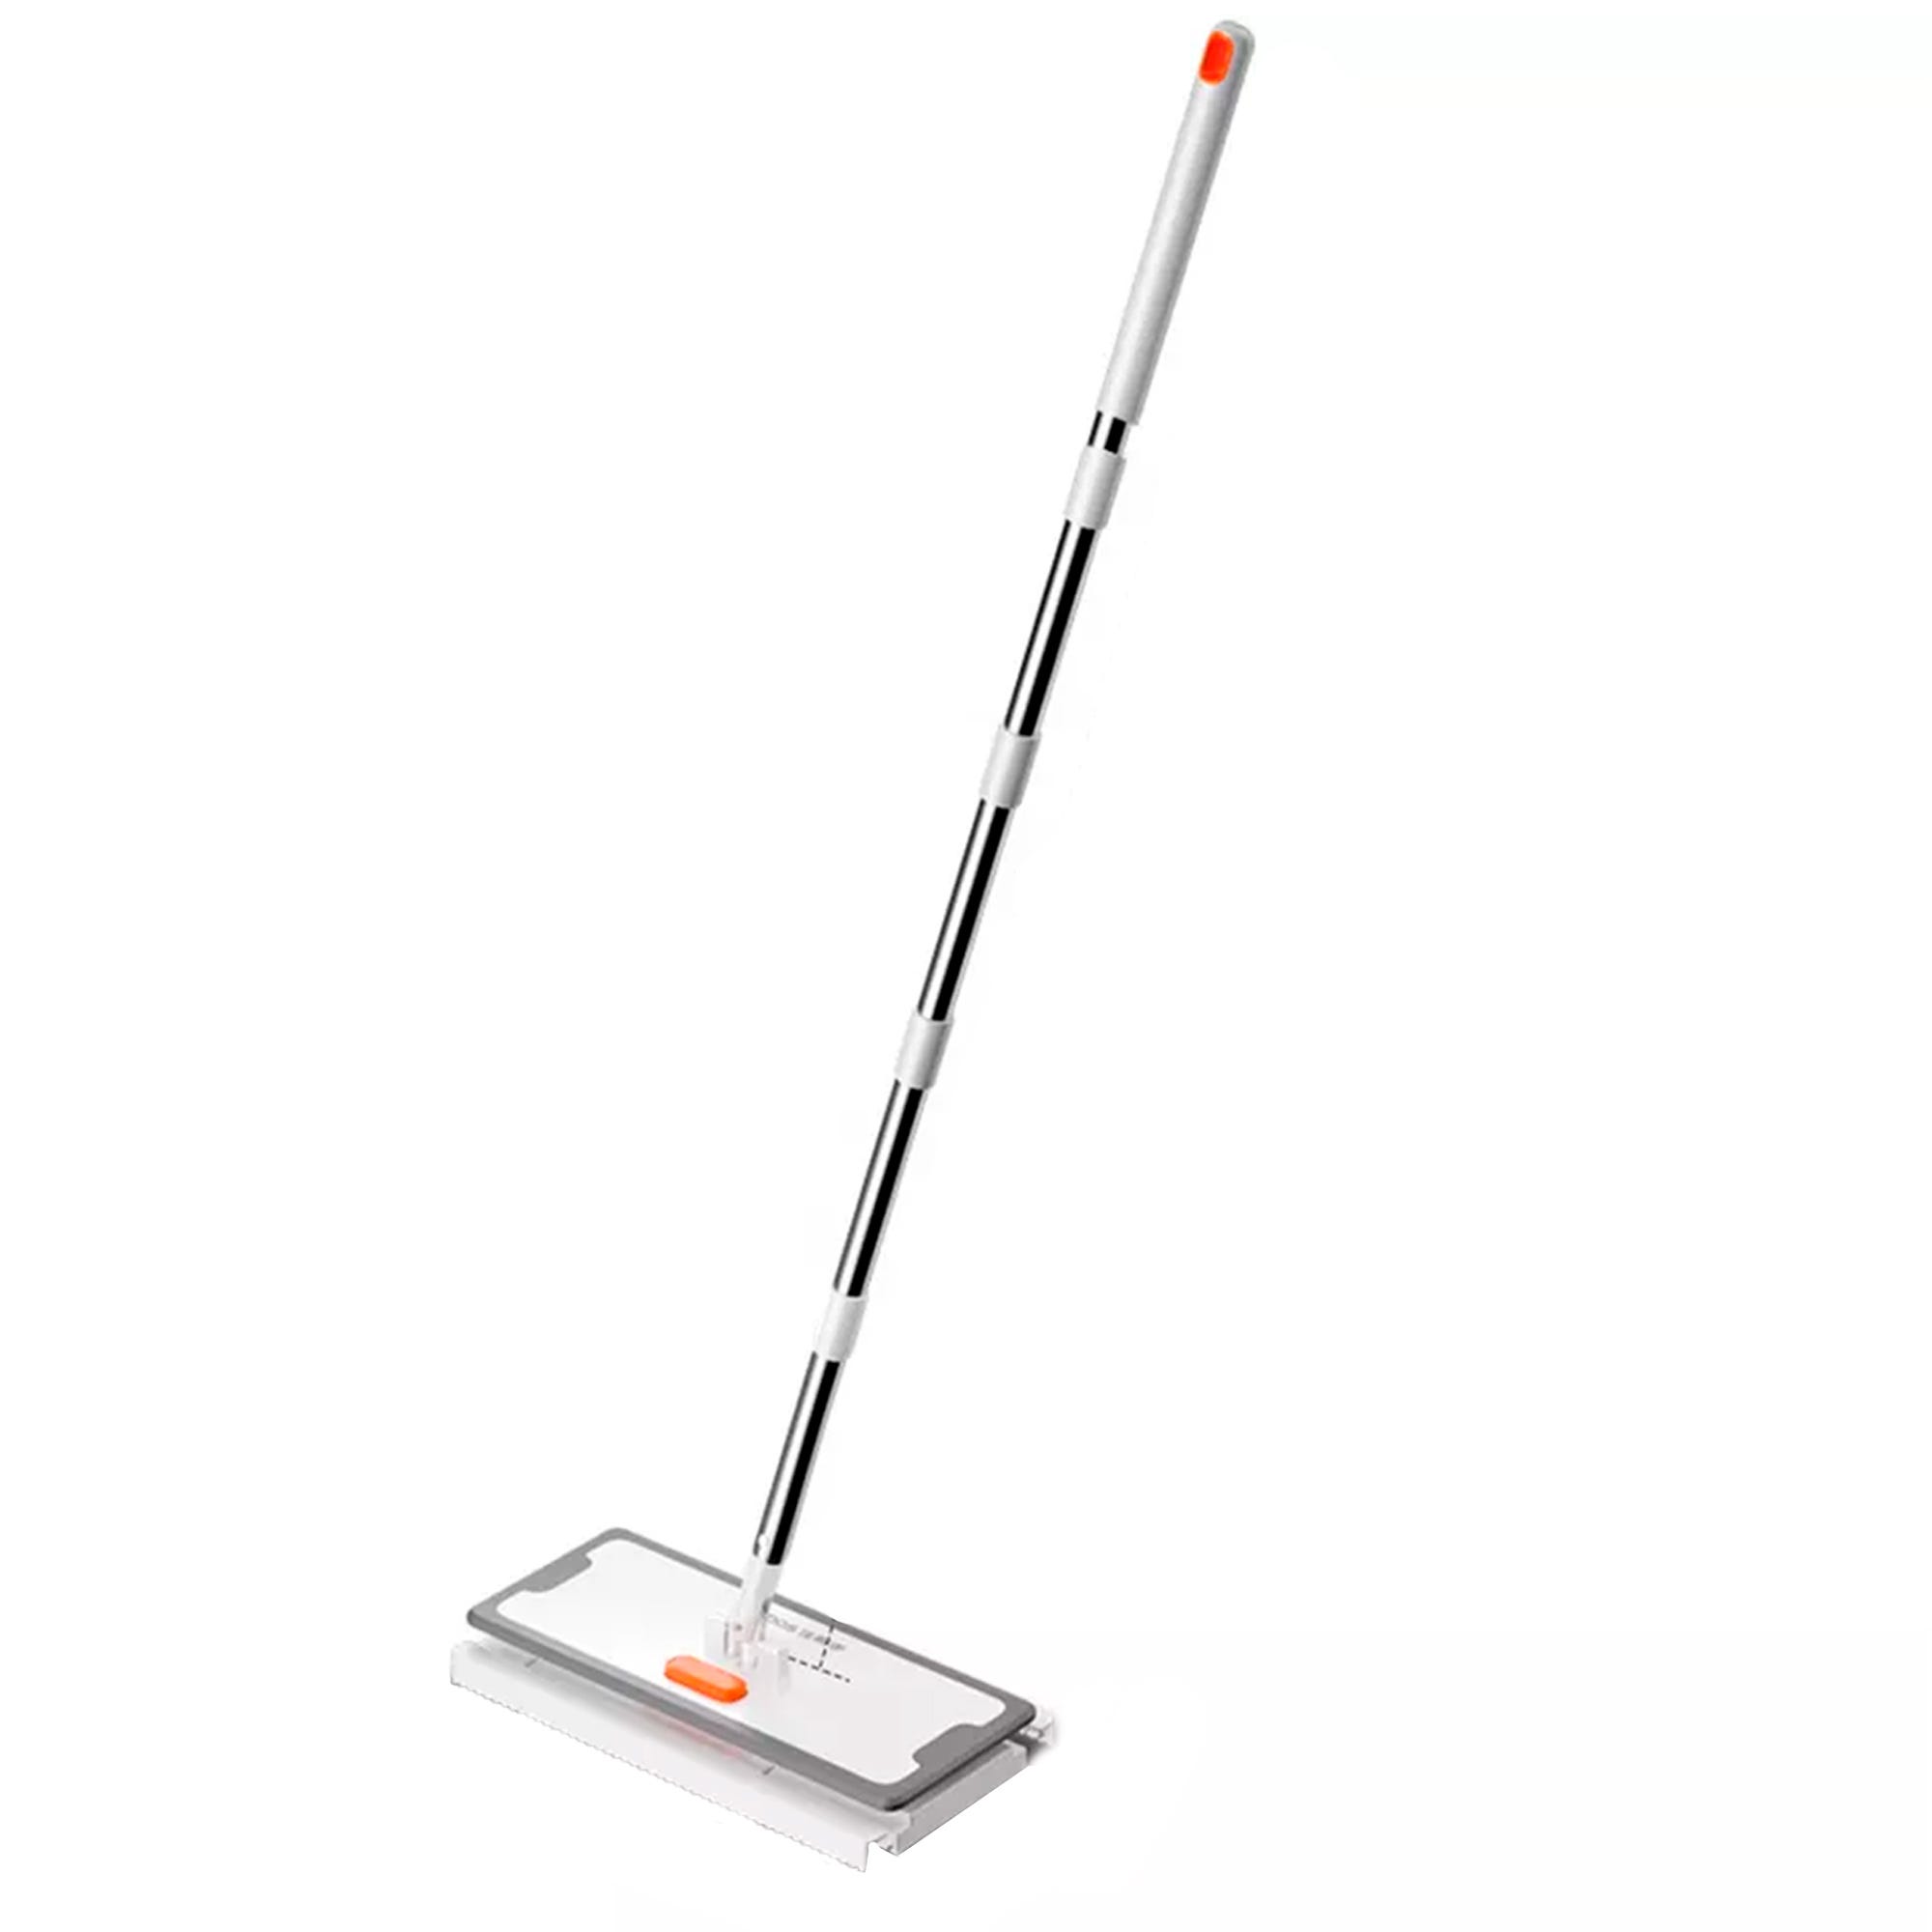 JOYBOS Mop - mocio piatto rotante per la pulizia dei pavimenti 2